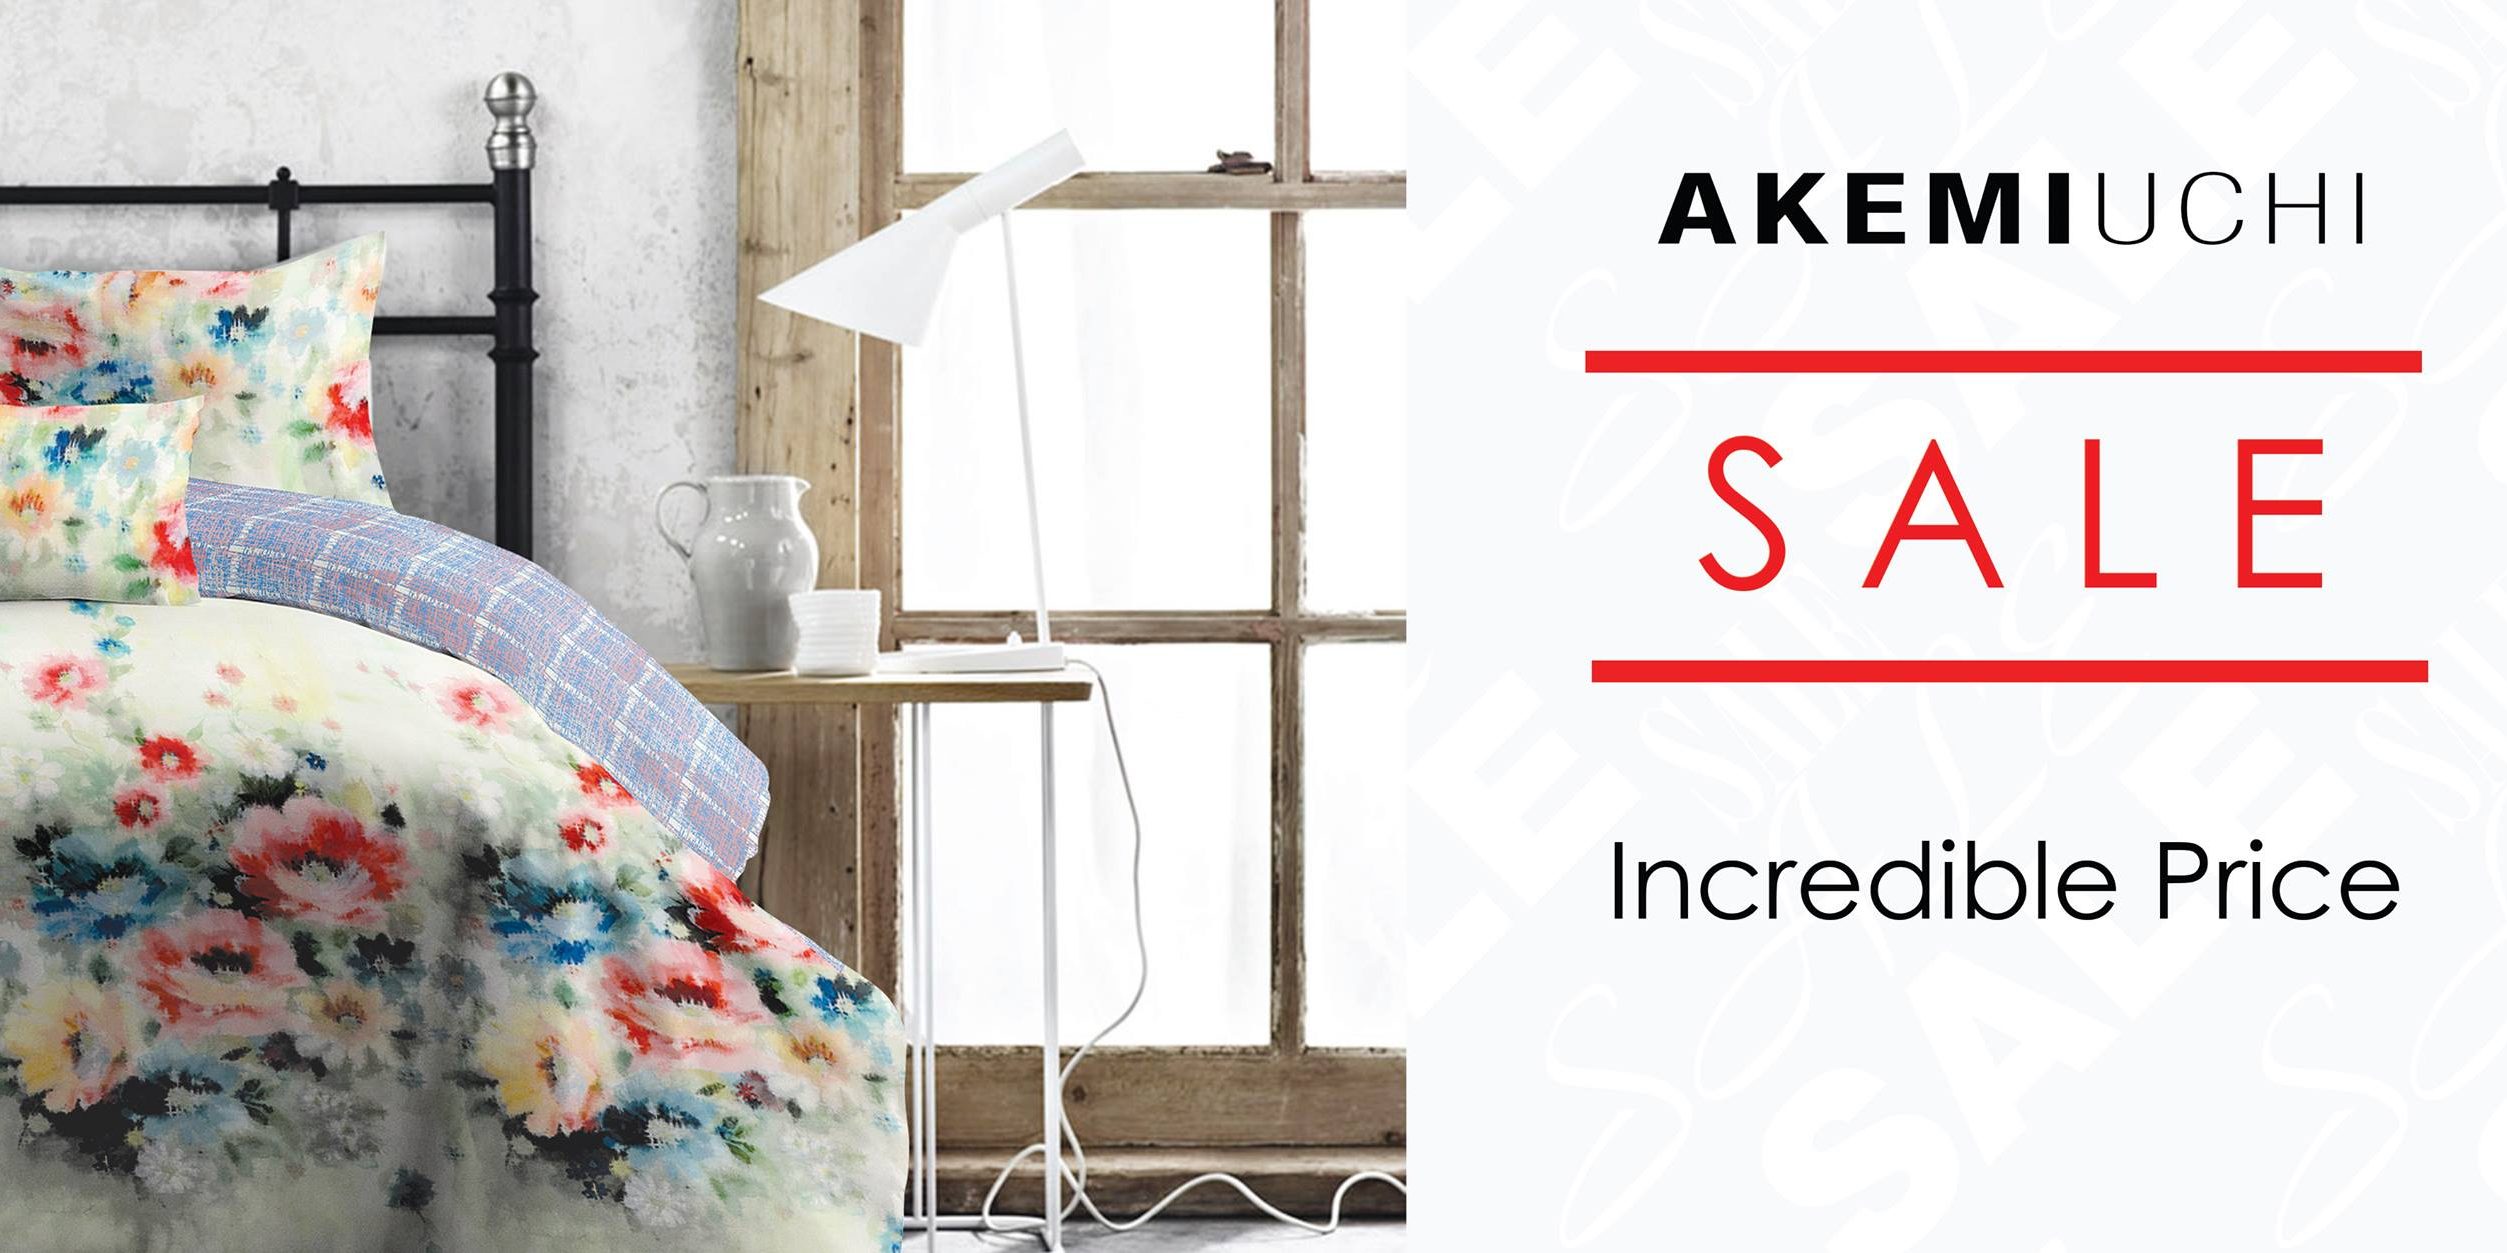 AkemiUchi Singapore Suntec City West Atrium Sale Promotion 12-18 Dec 2016